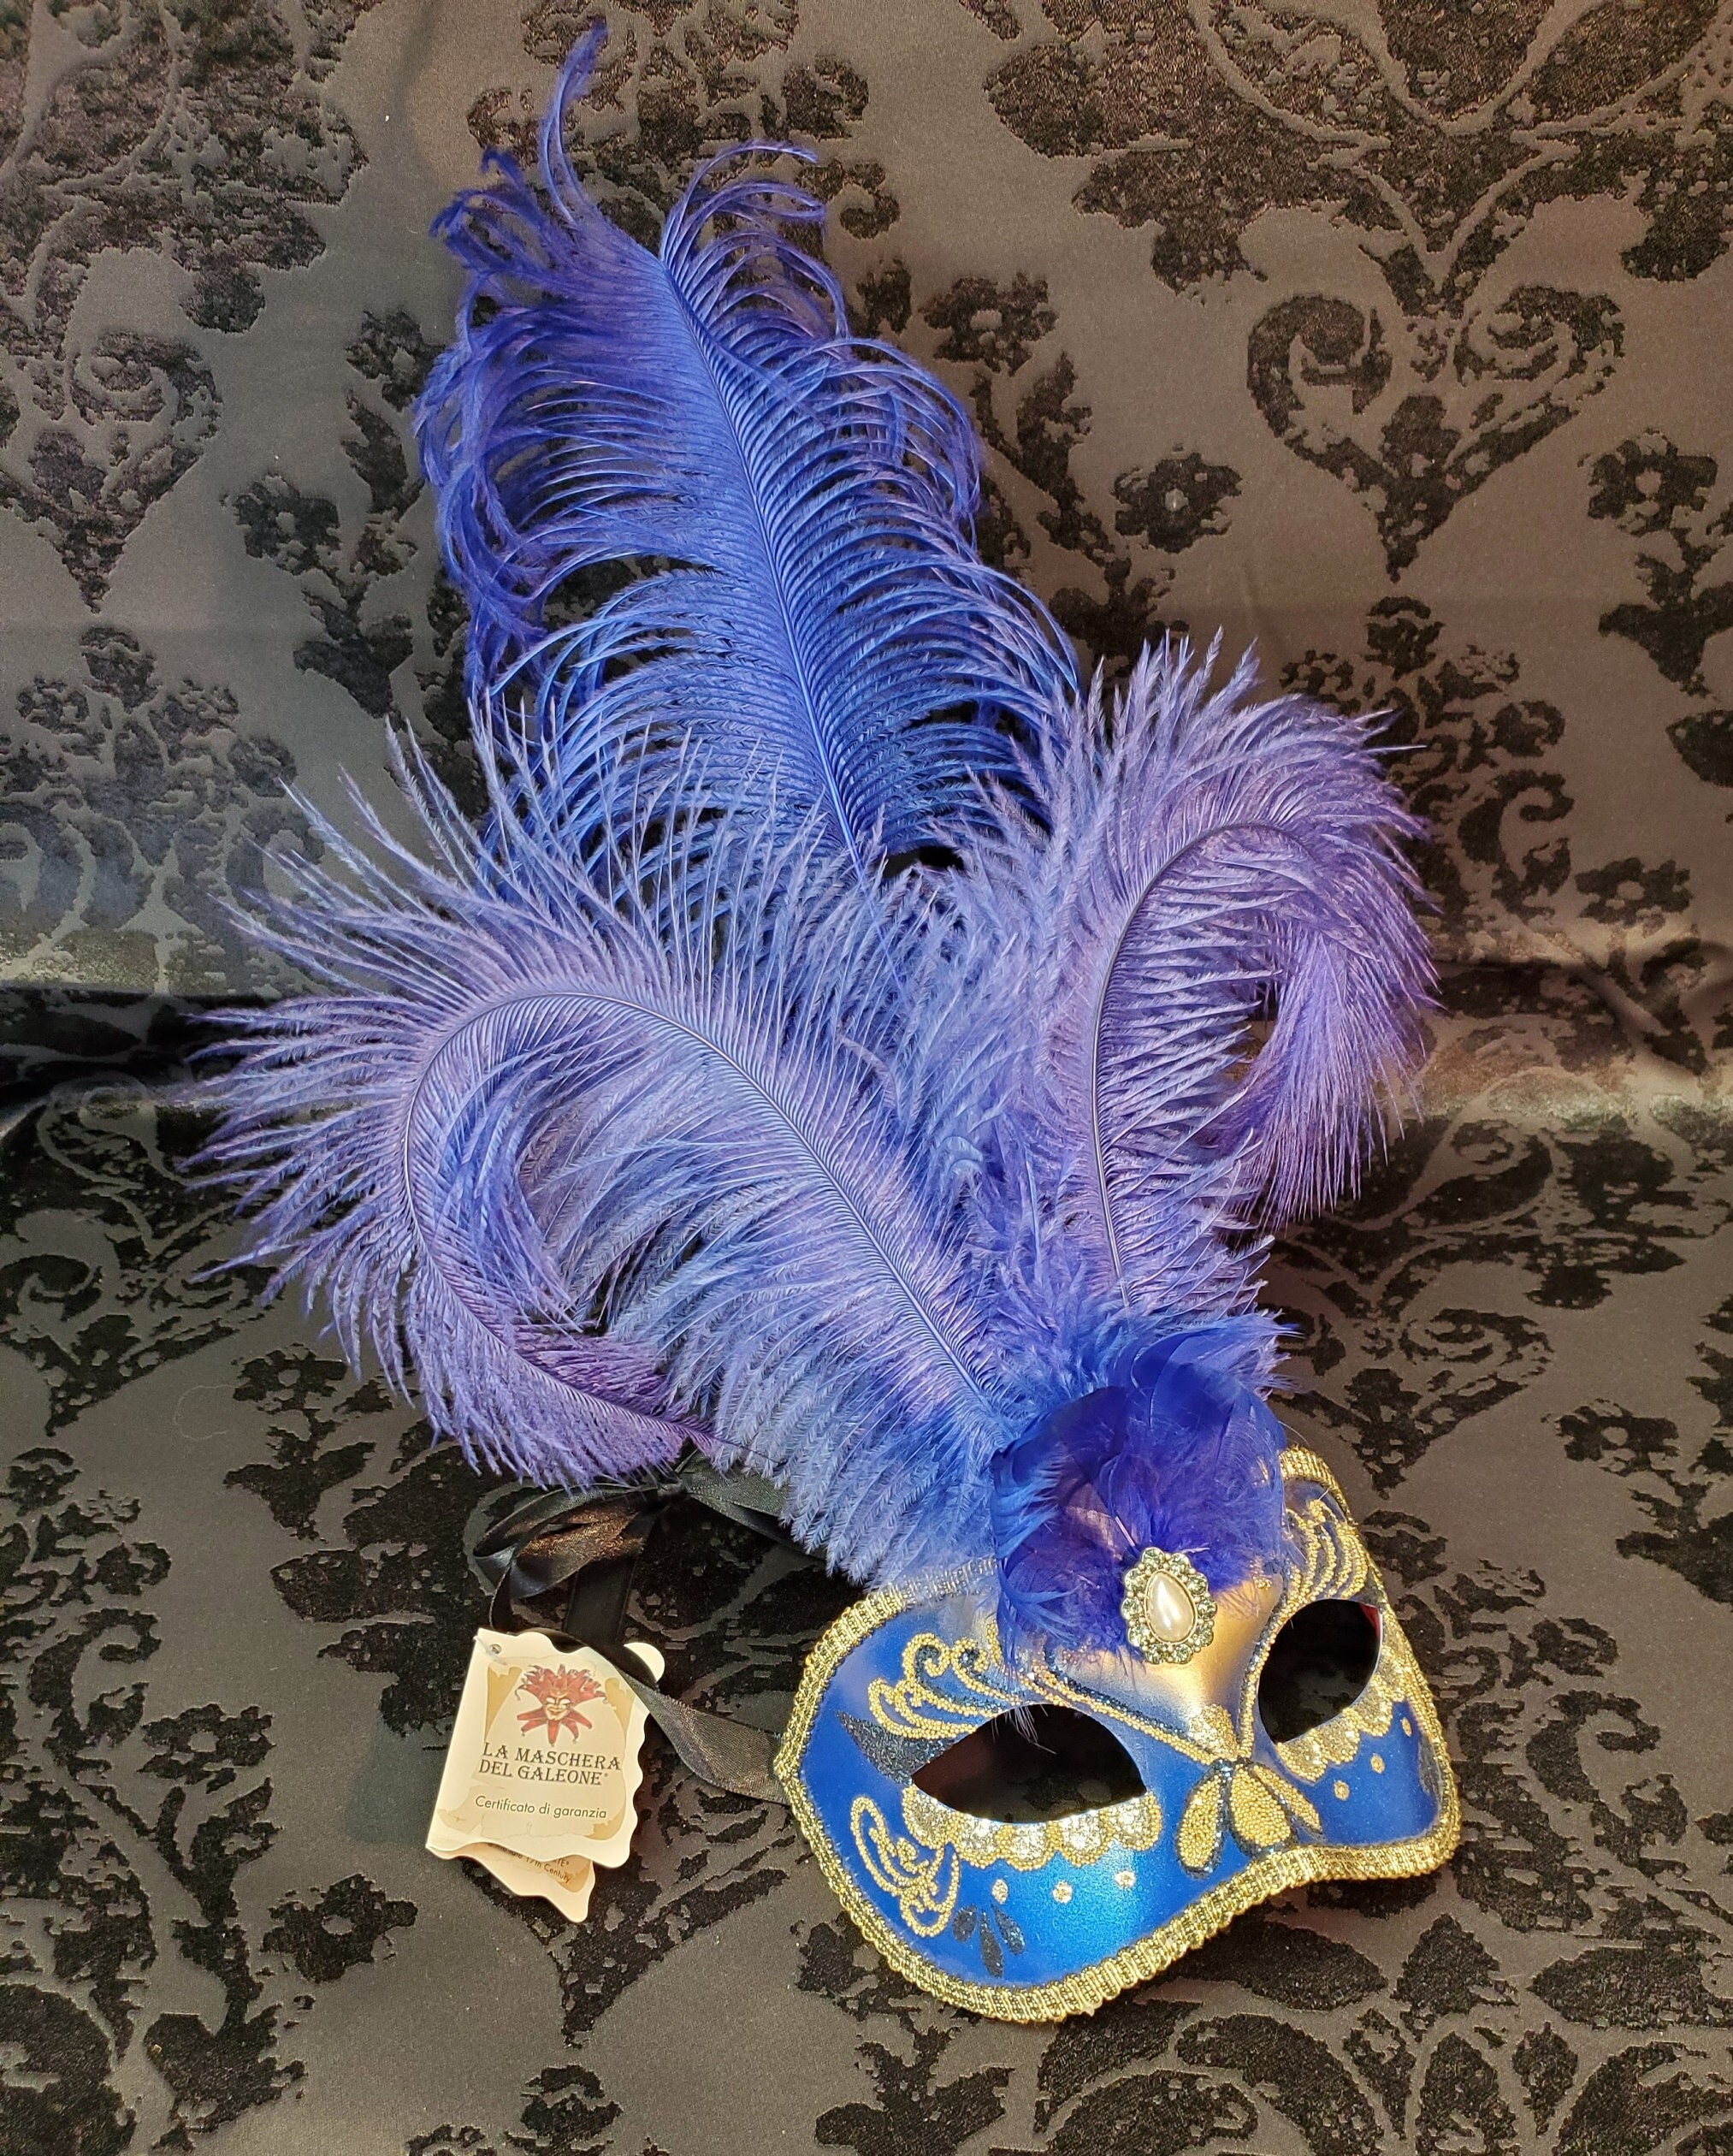 Masquerade Party Backdrops Retro Gold Black Mask Carnival - Temu